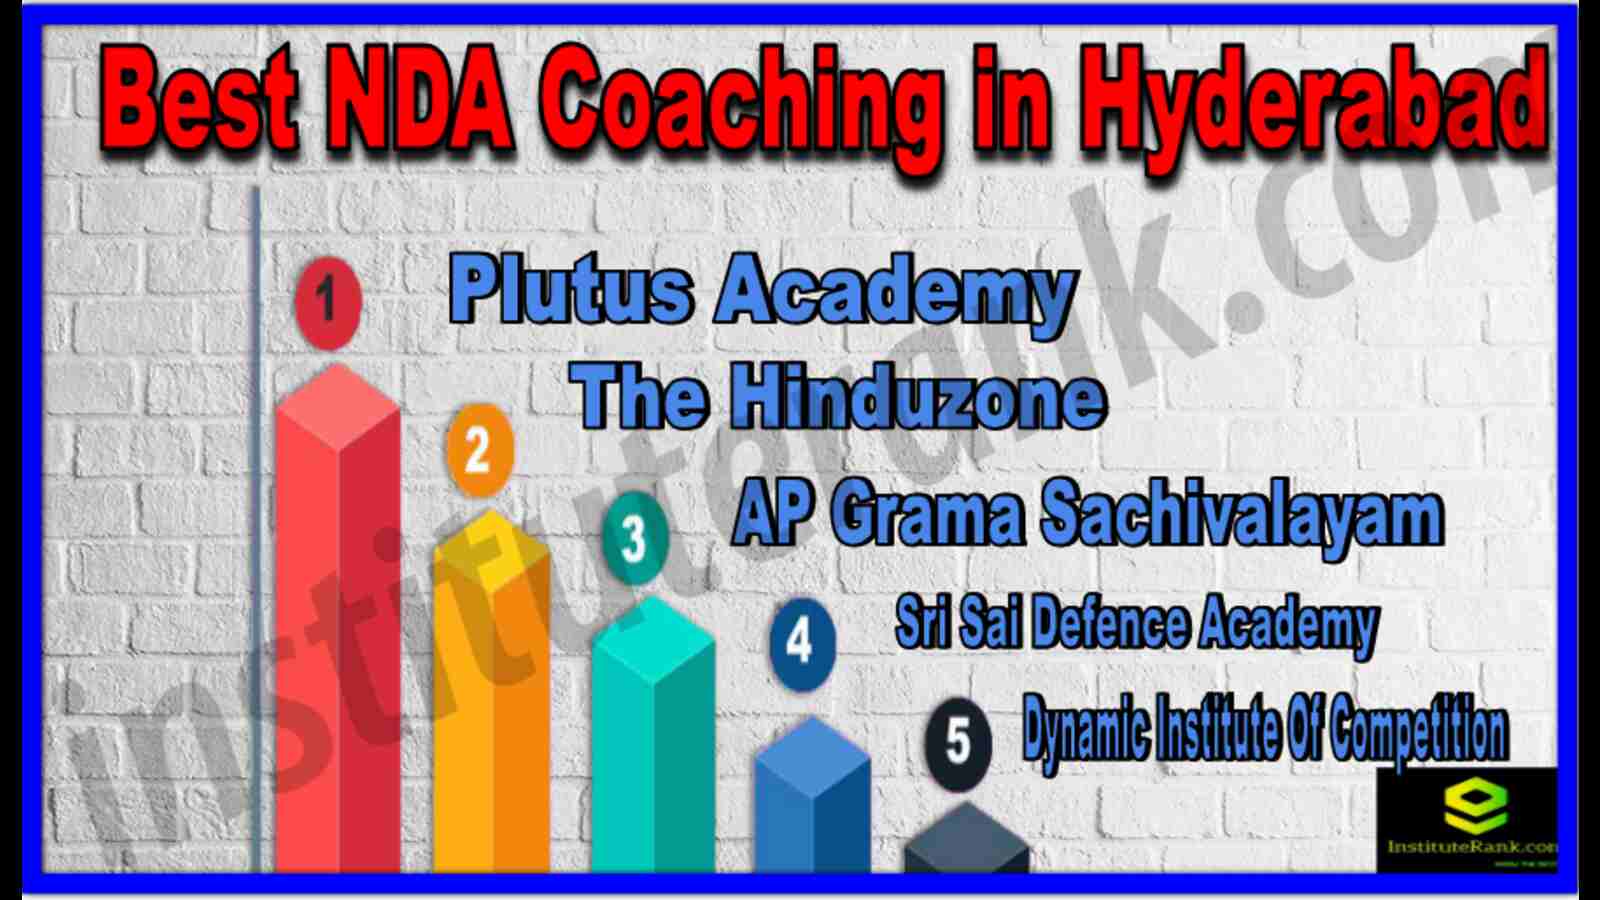 Top 10 NDA Coaching Institutes In Hyderabad